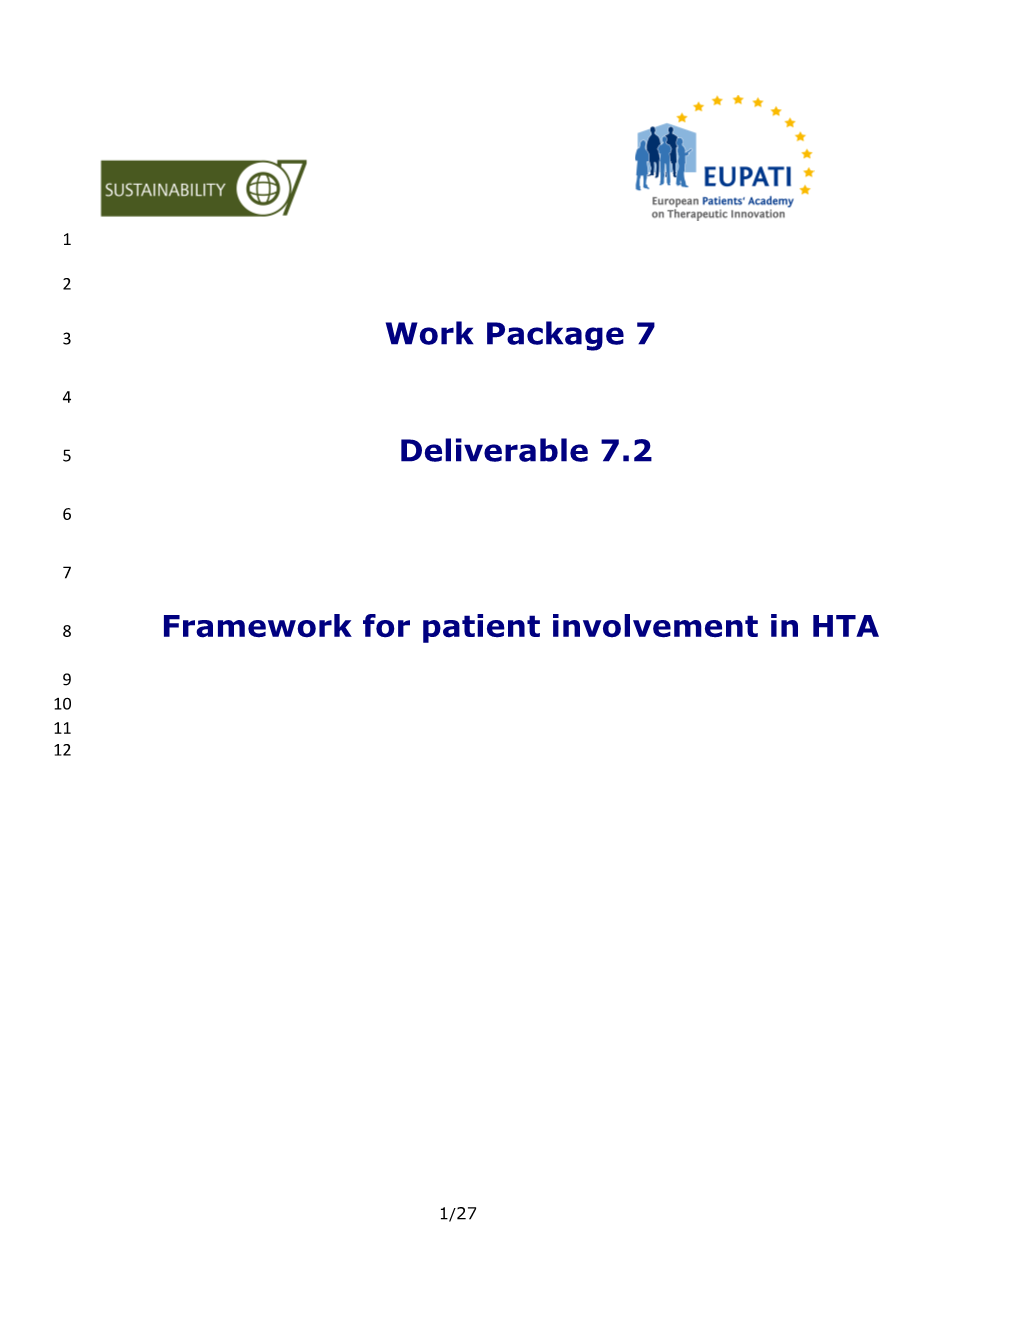 Framework for Patient Involvement in HTA